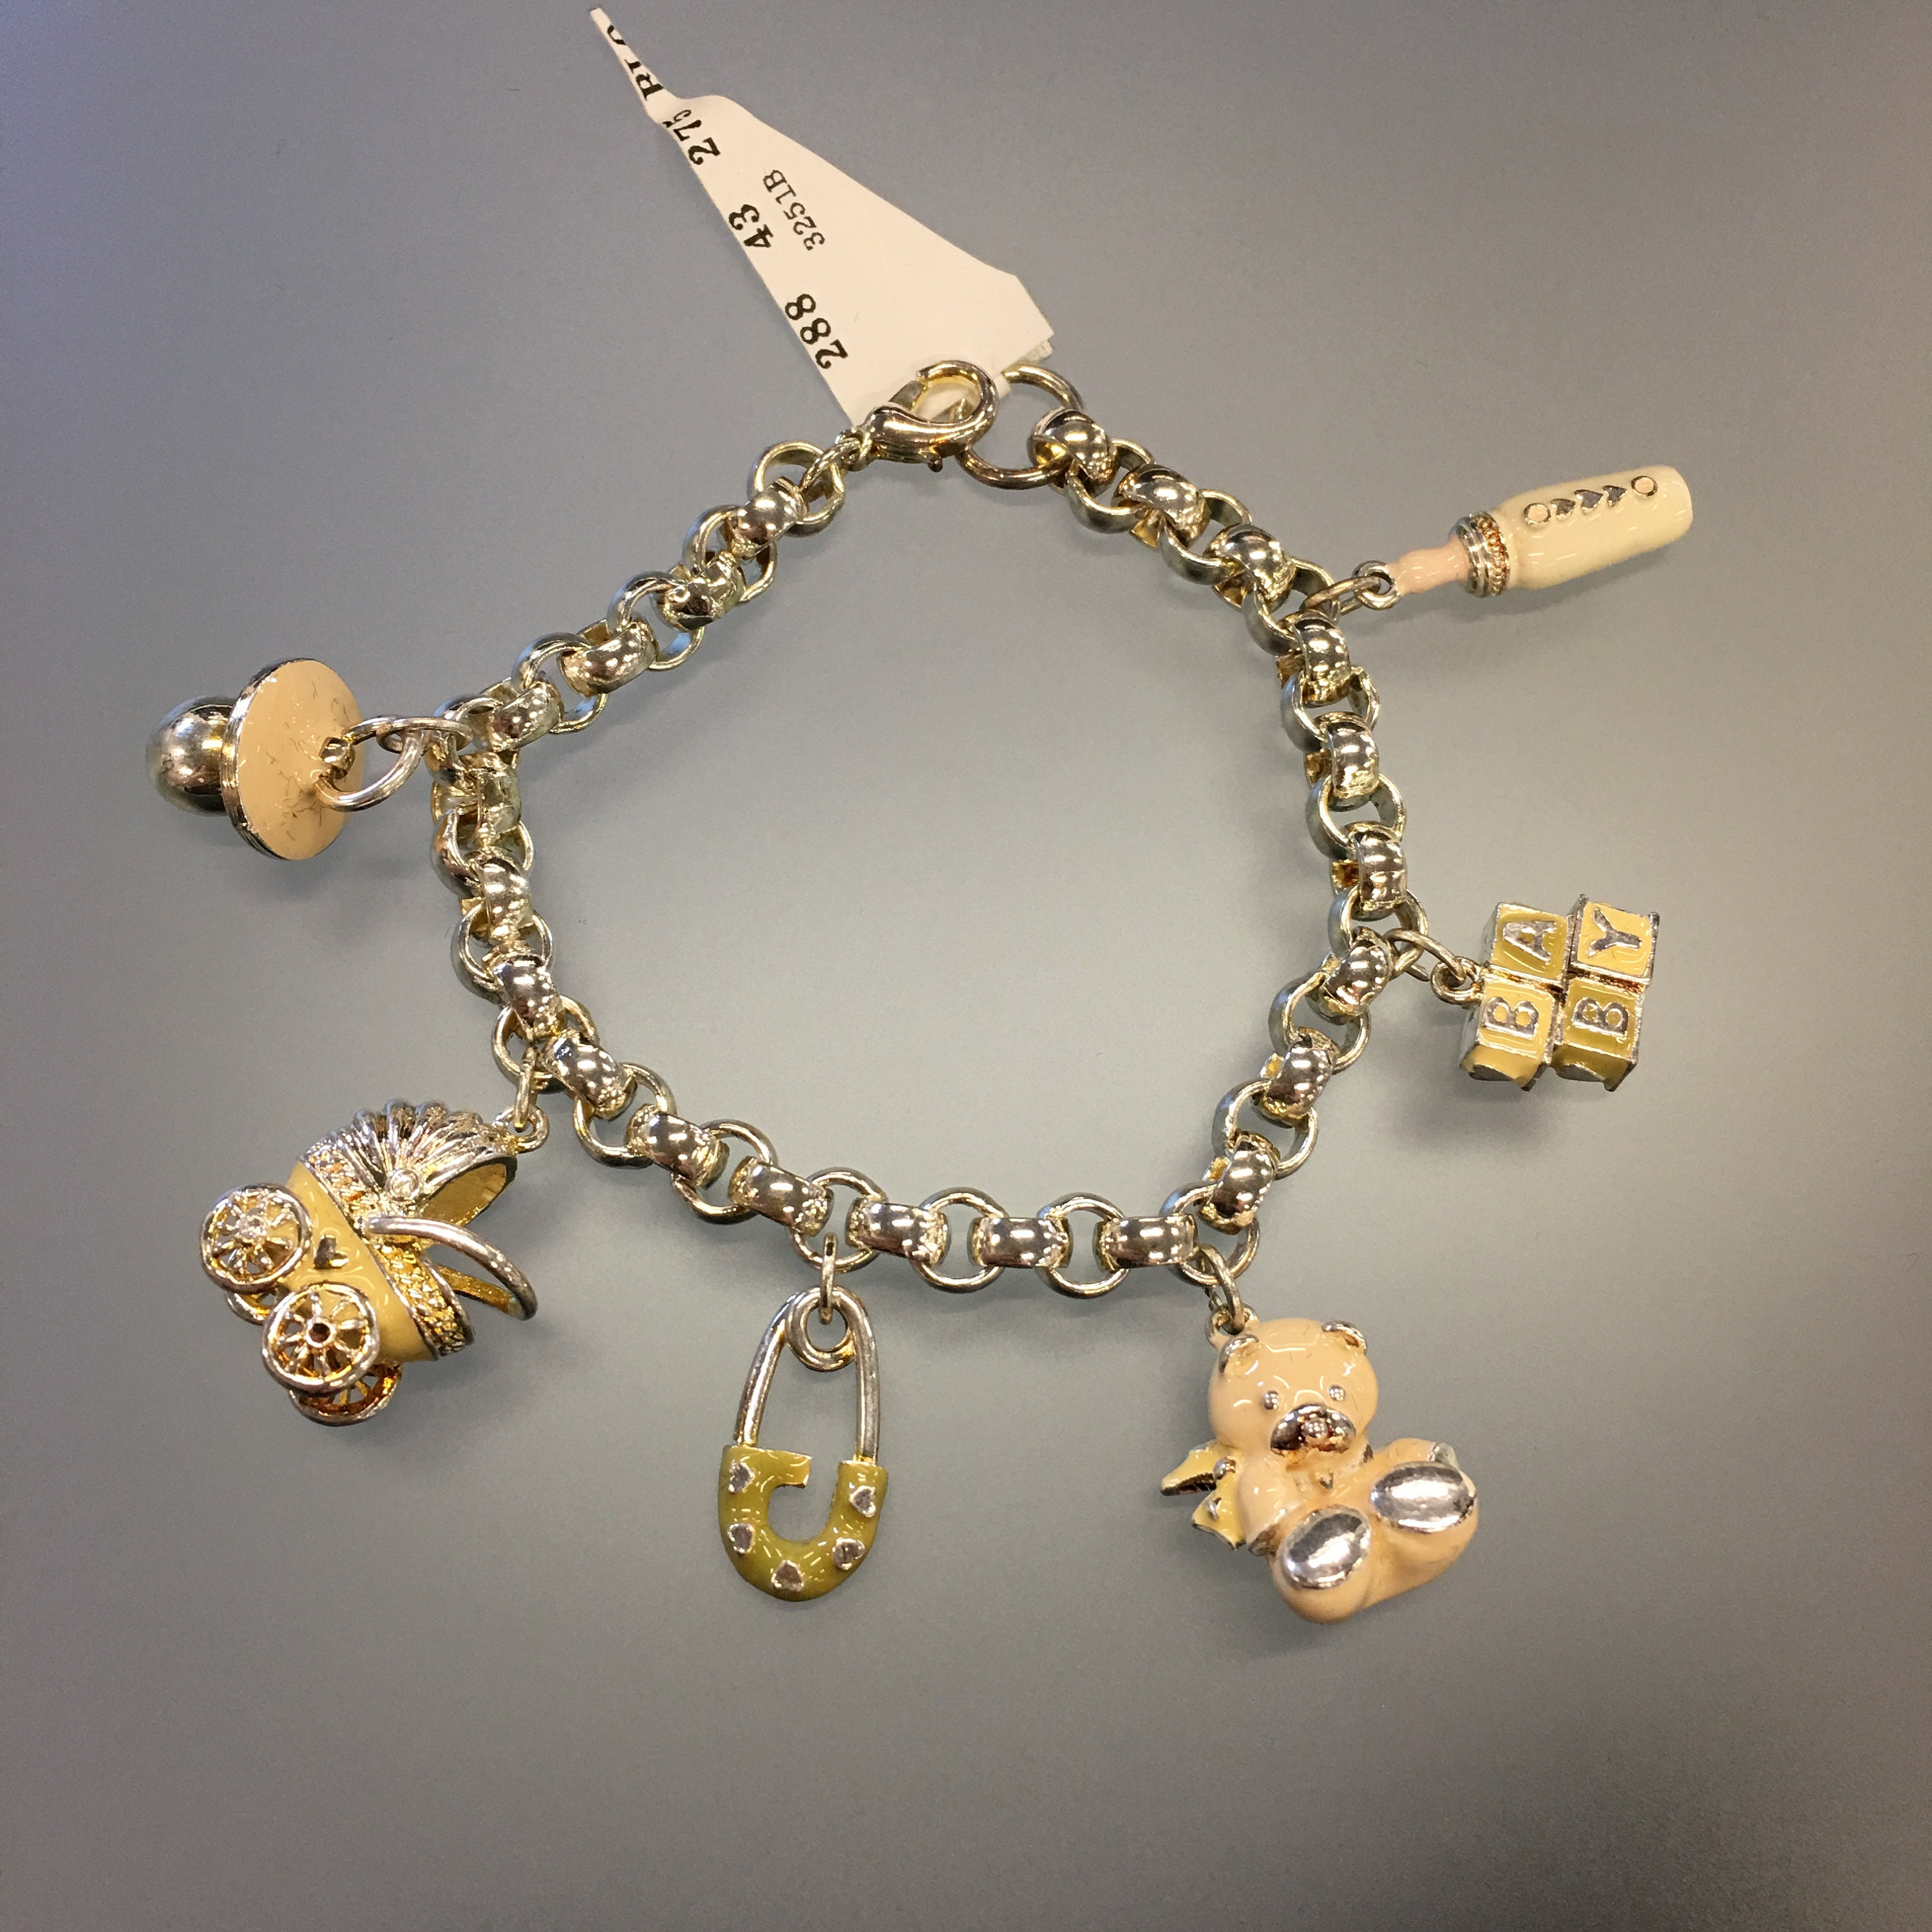 White Gold Baby Bracelet with Eye Charm & a Cross - E Silvercorner